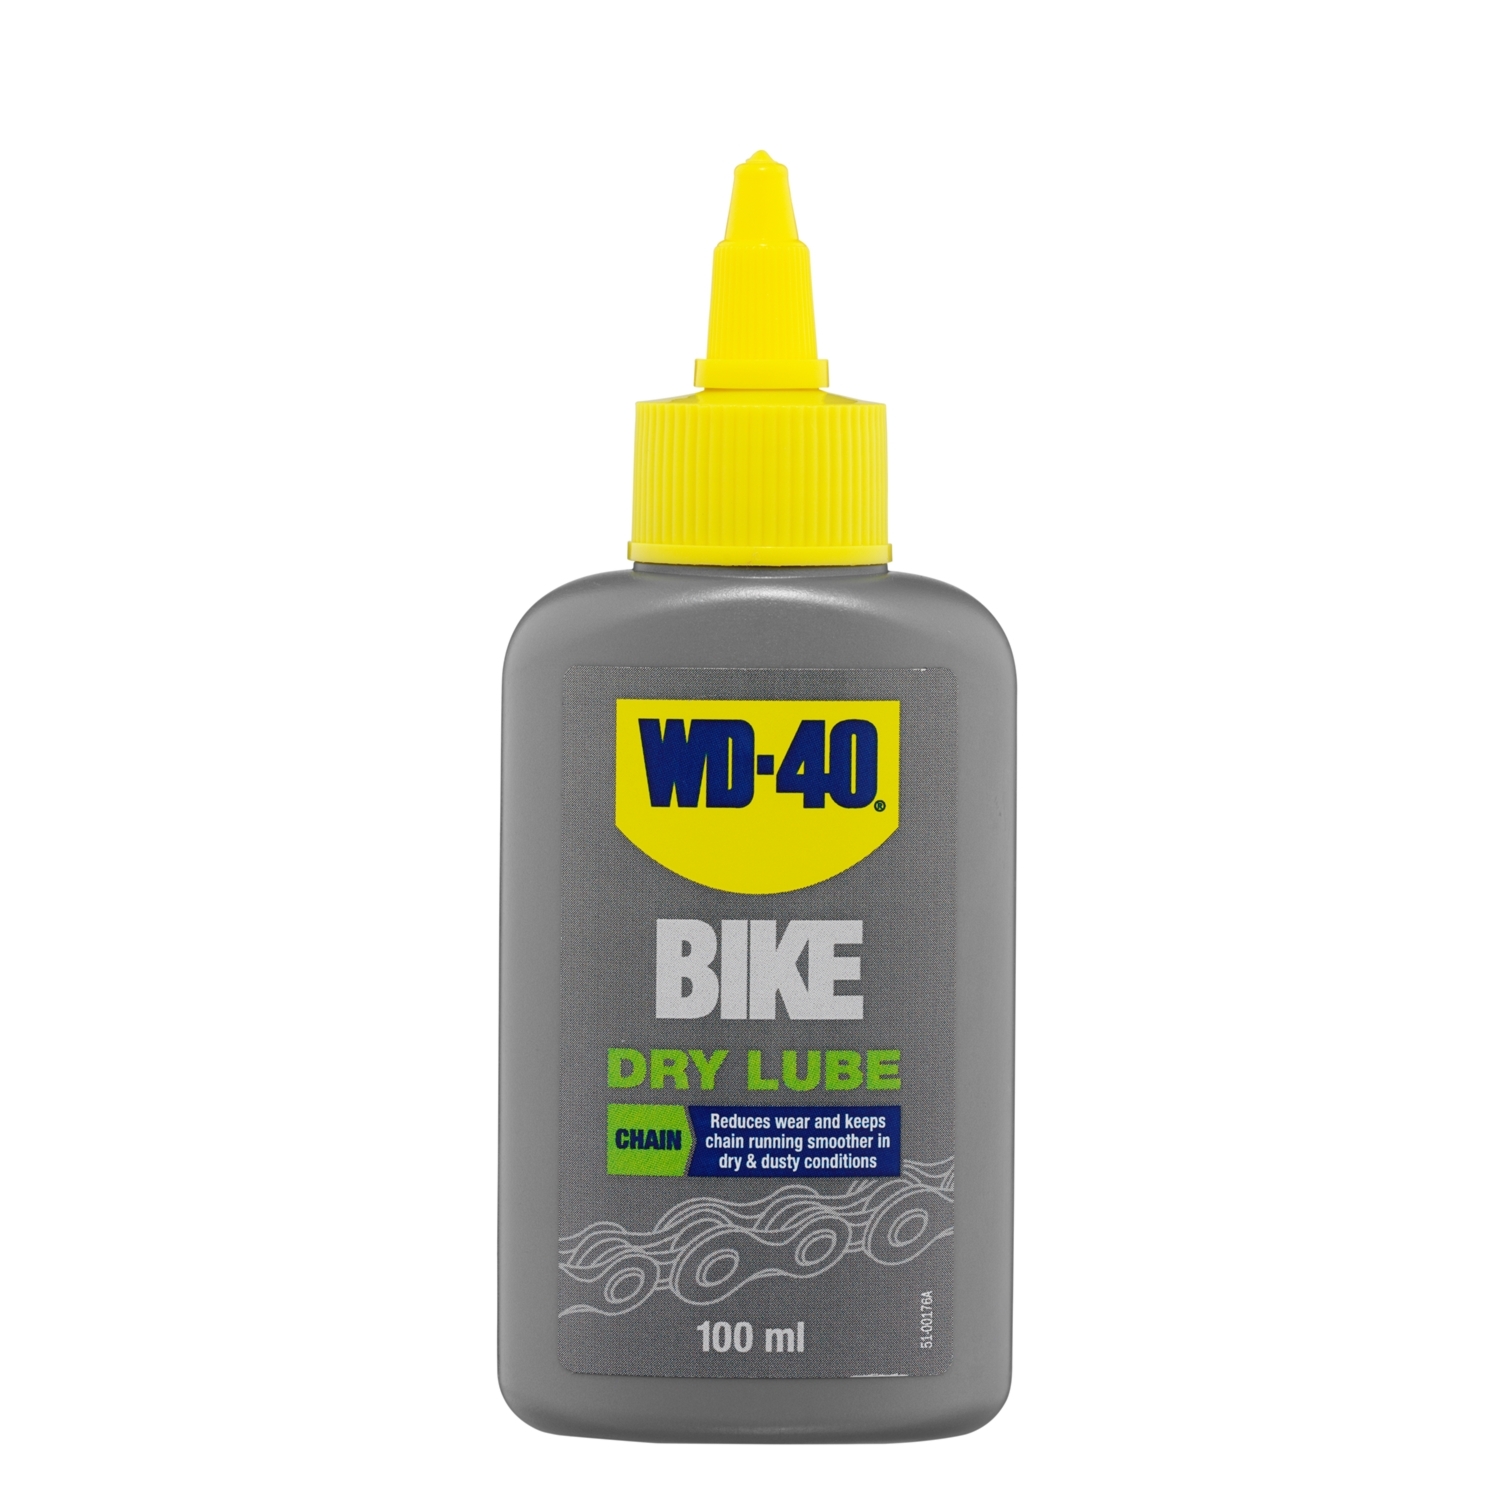 WD-40 Bike Dry Chain Lube Drip Oil Image